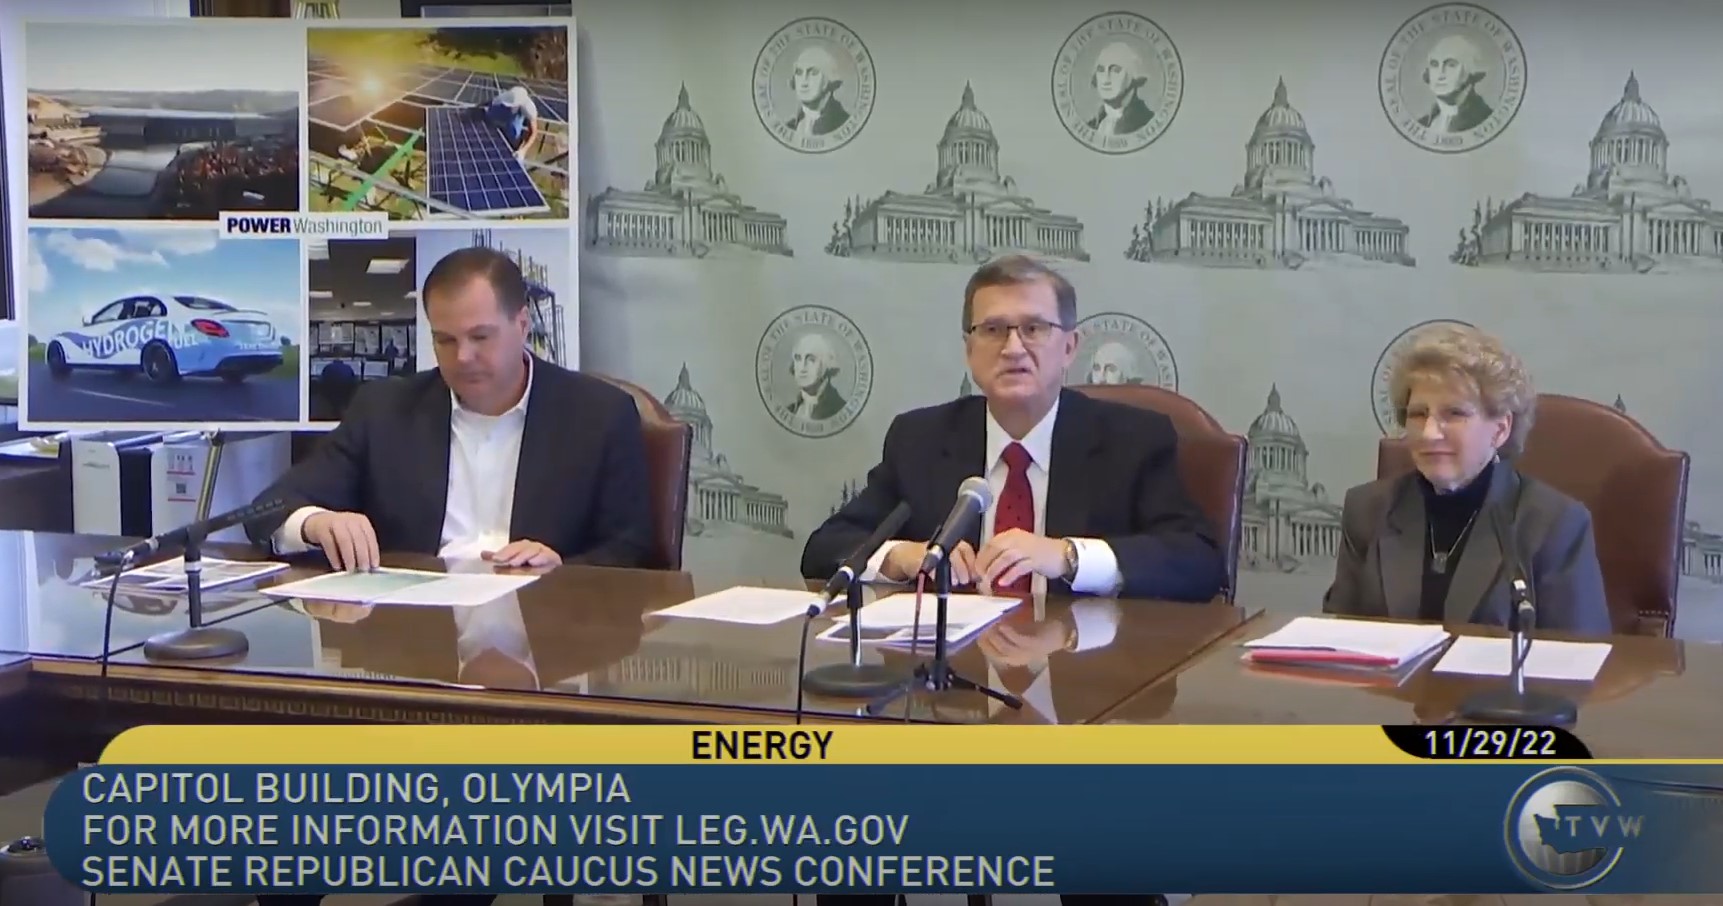 VIDEO: Republican senators unveil ‘Power Washington’ energy plan